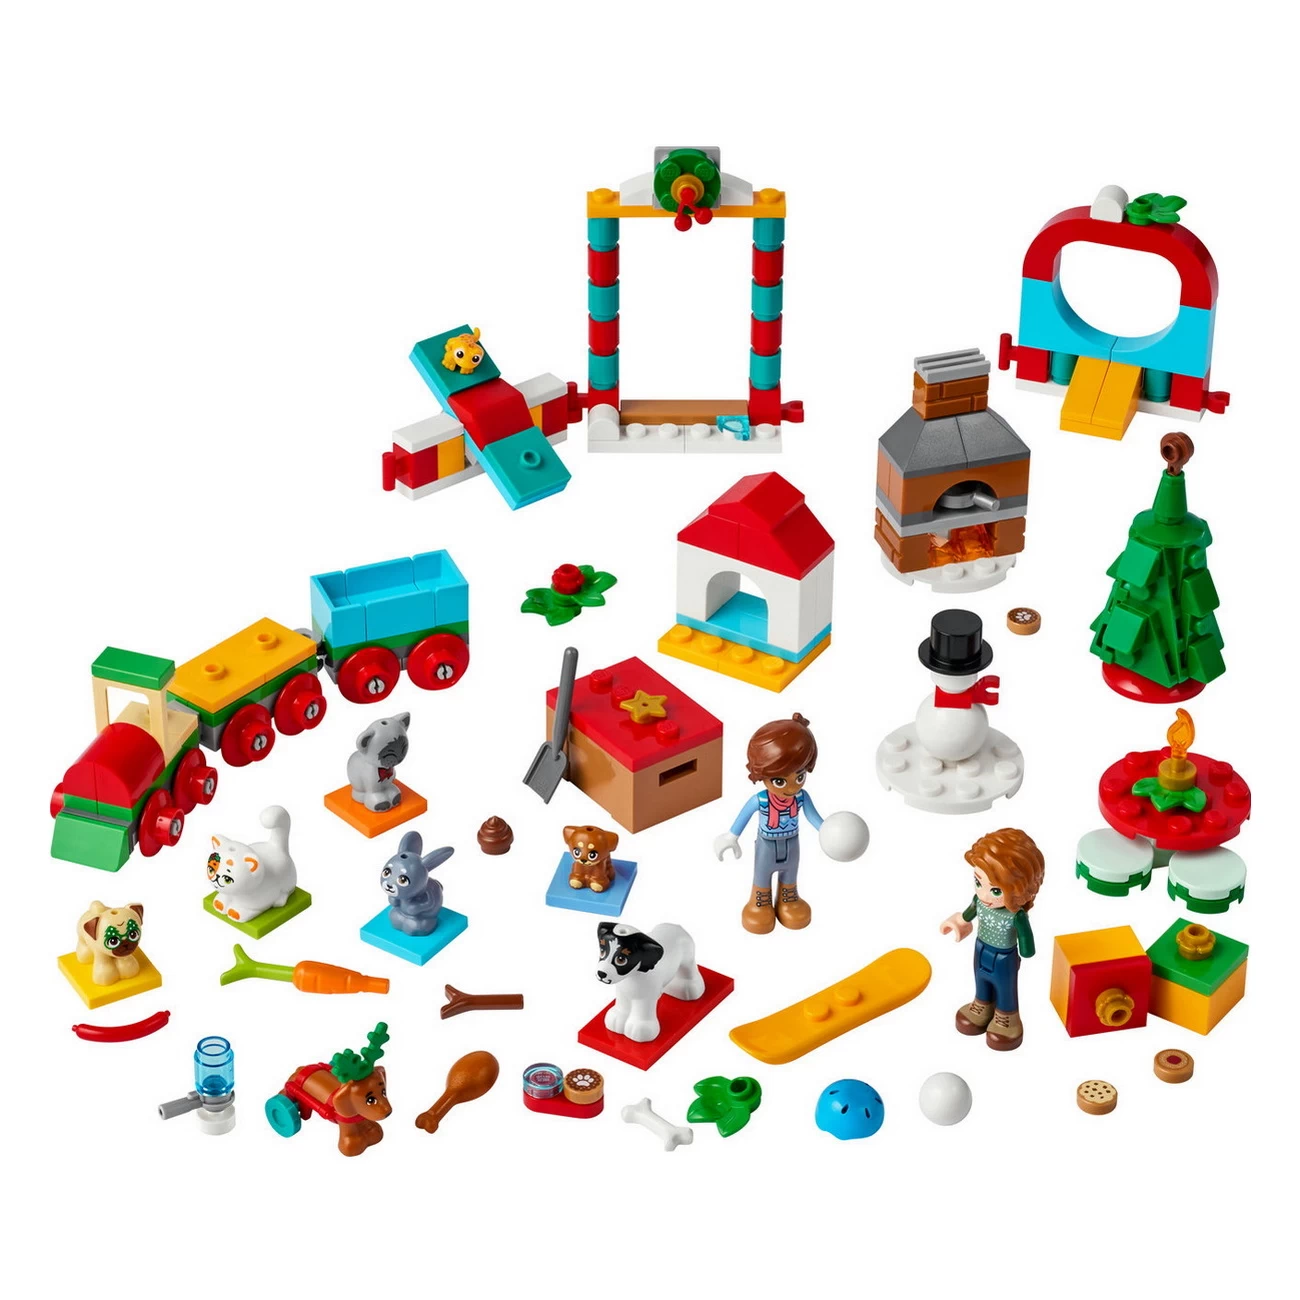 LEGO Friends - 2023 Adventskalender (41758)